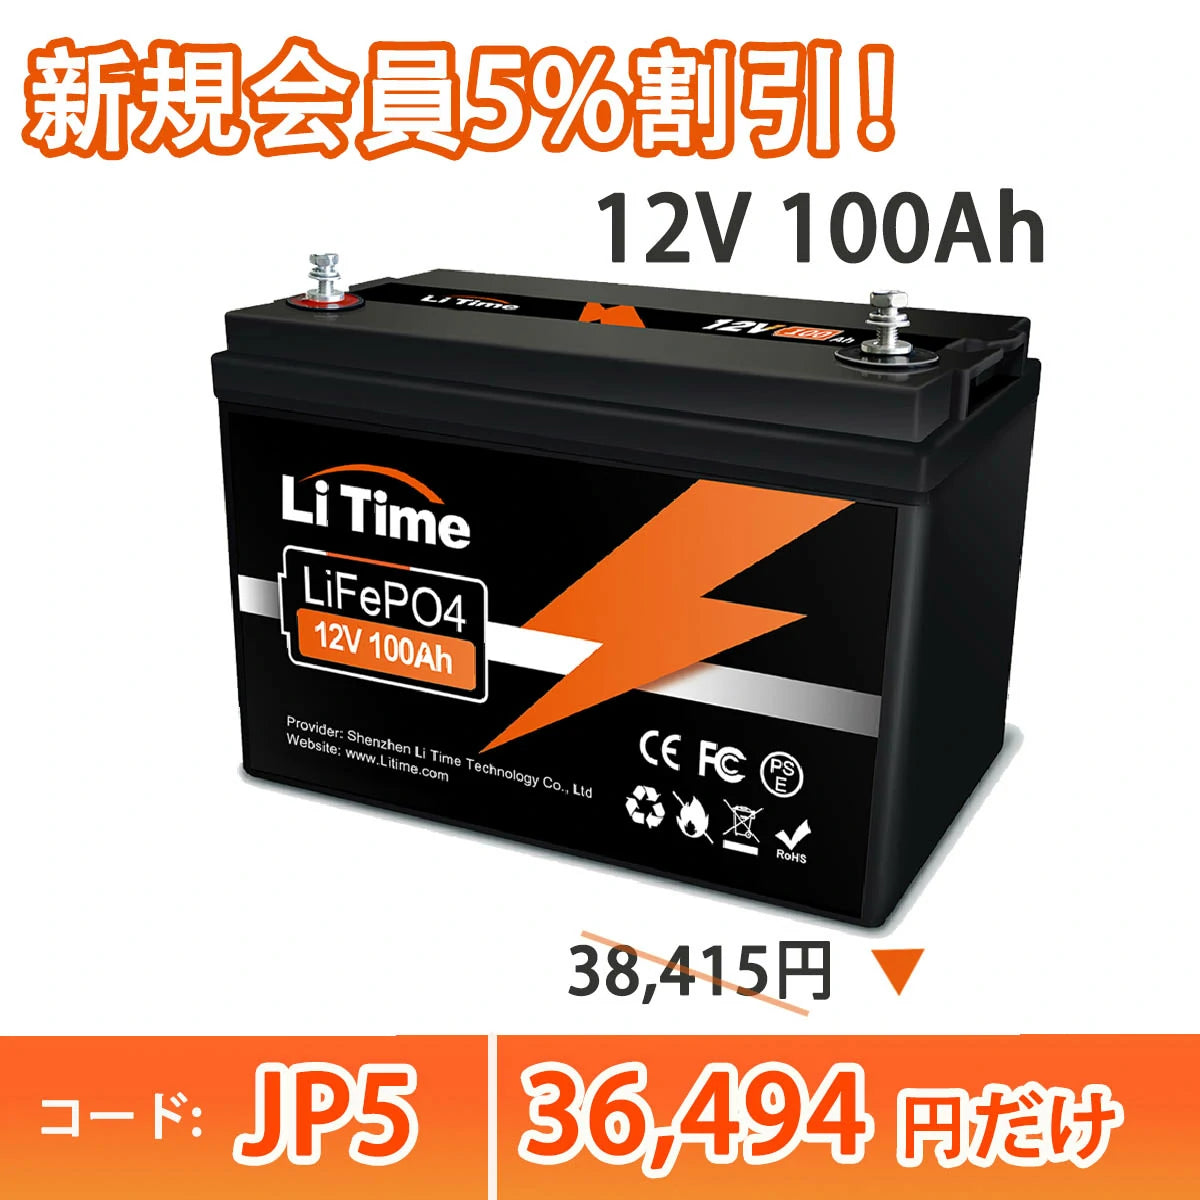 LiTime 12V 100Ah LiFePO4 リン酸鉄リチウムイオンバッテリー 内蔵100A BMS https://jp.litime.com/products/12v100ah